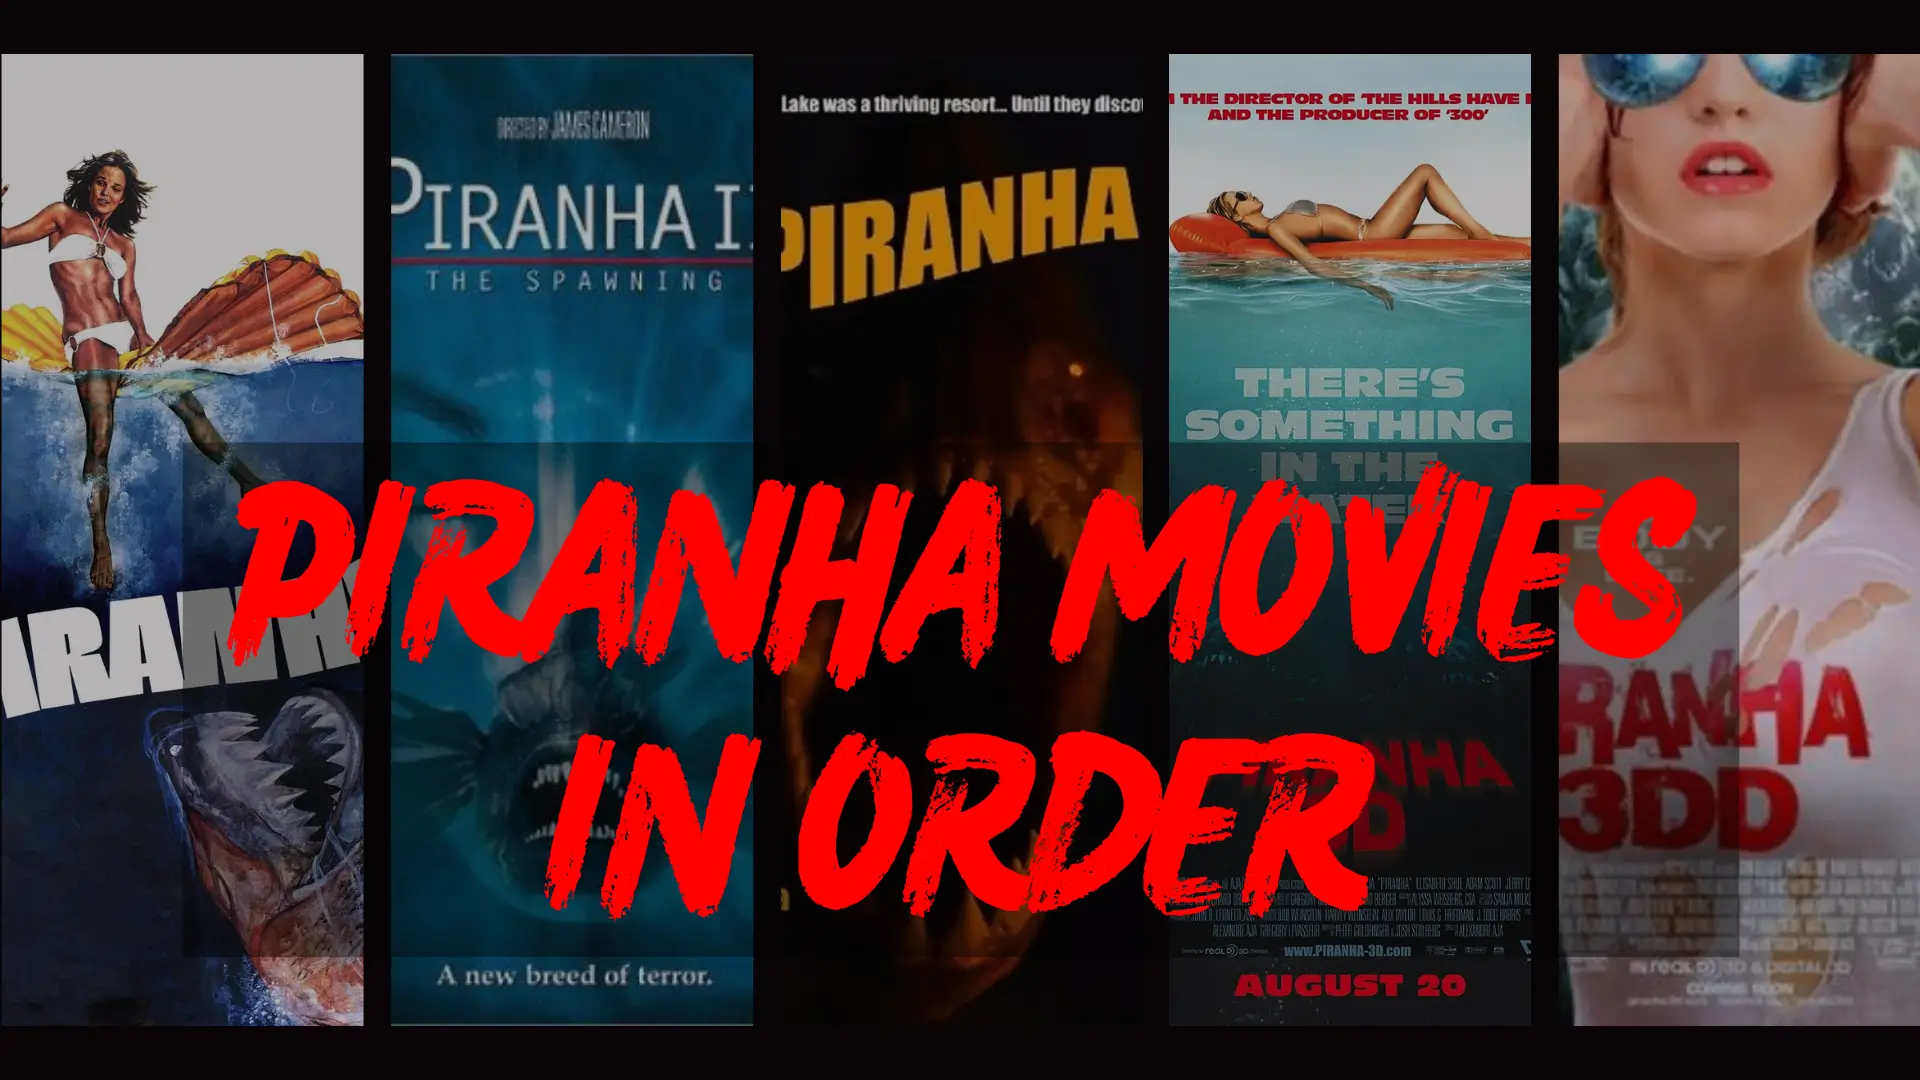 Piranha Movies in Order